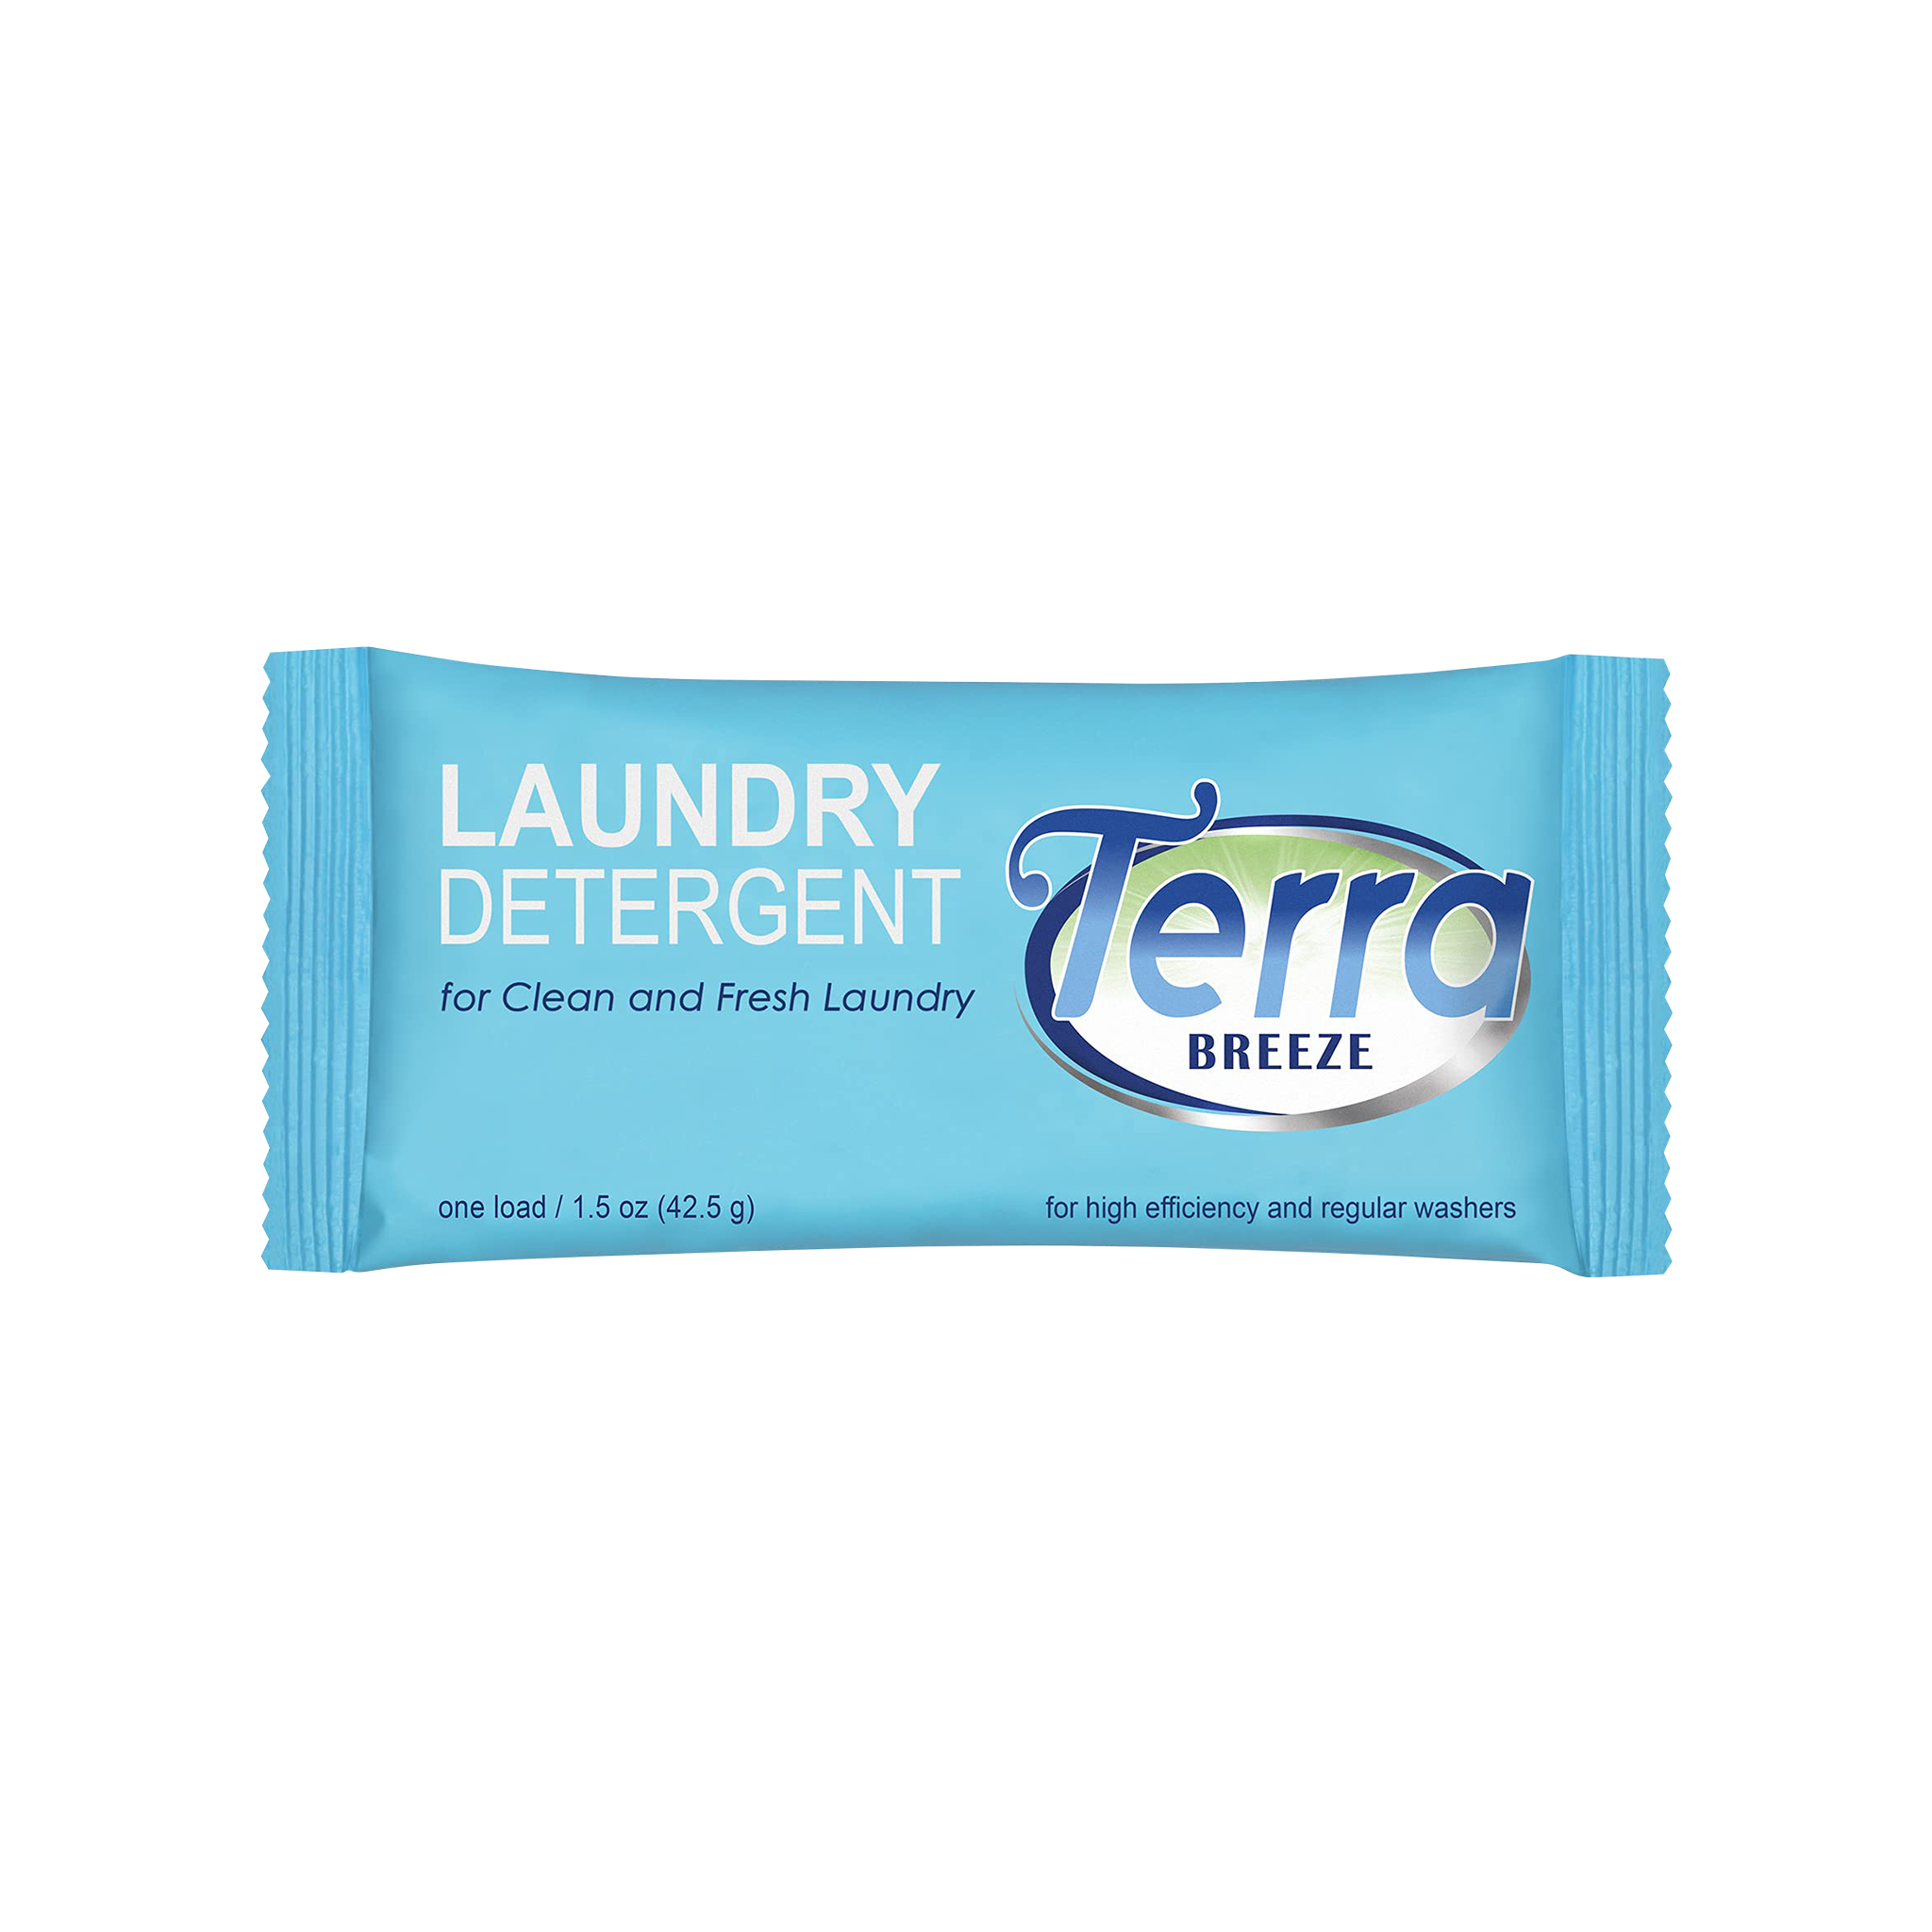 Terra Breeze Laundry Detergent Powder - 1.5 Oz Packet - Case of 150